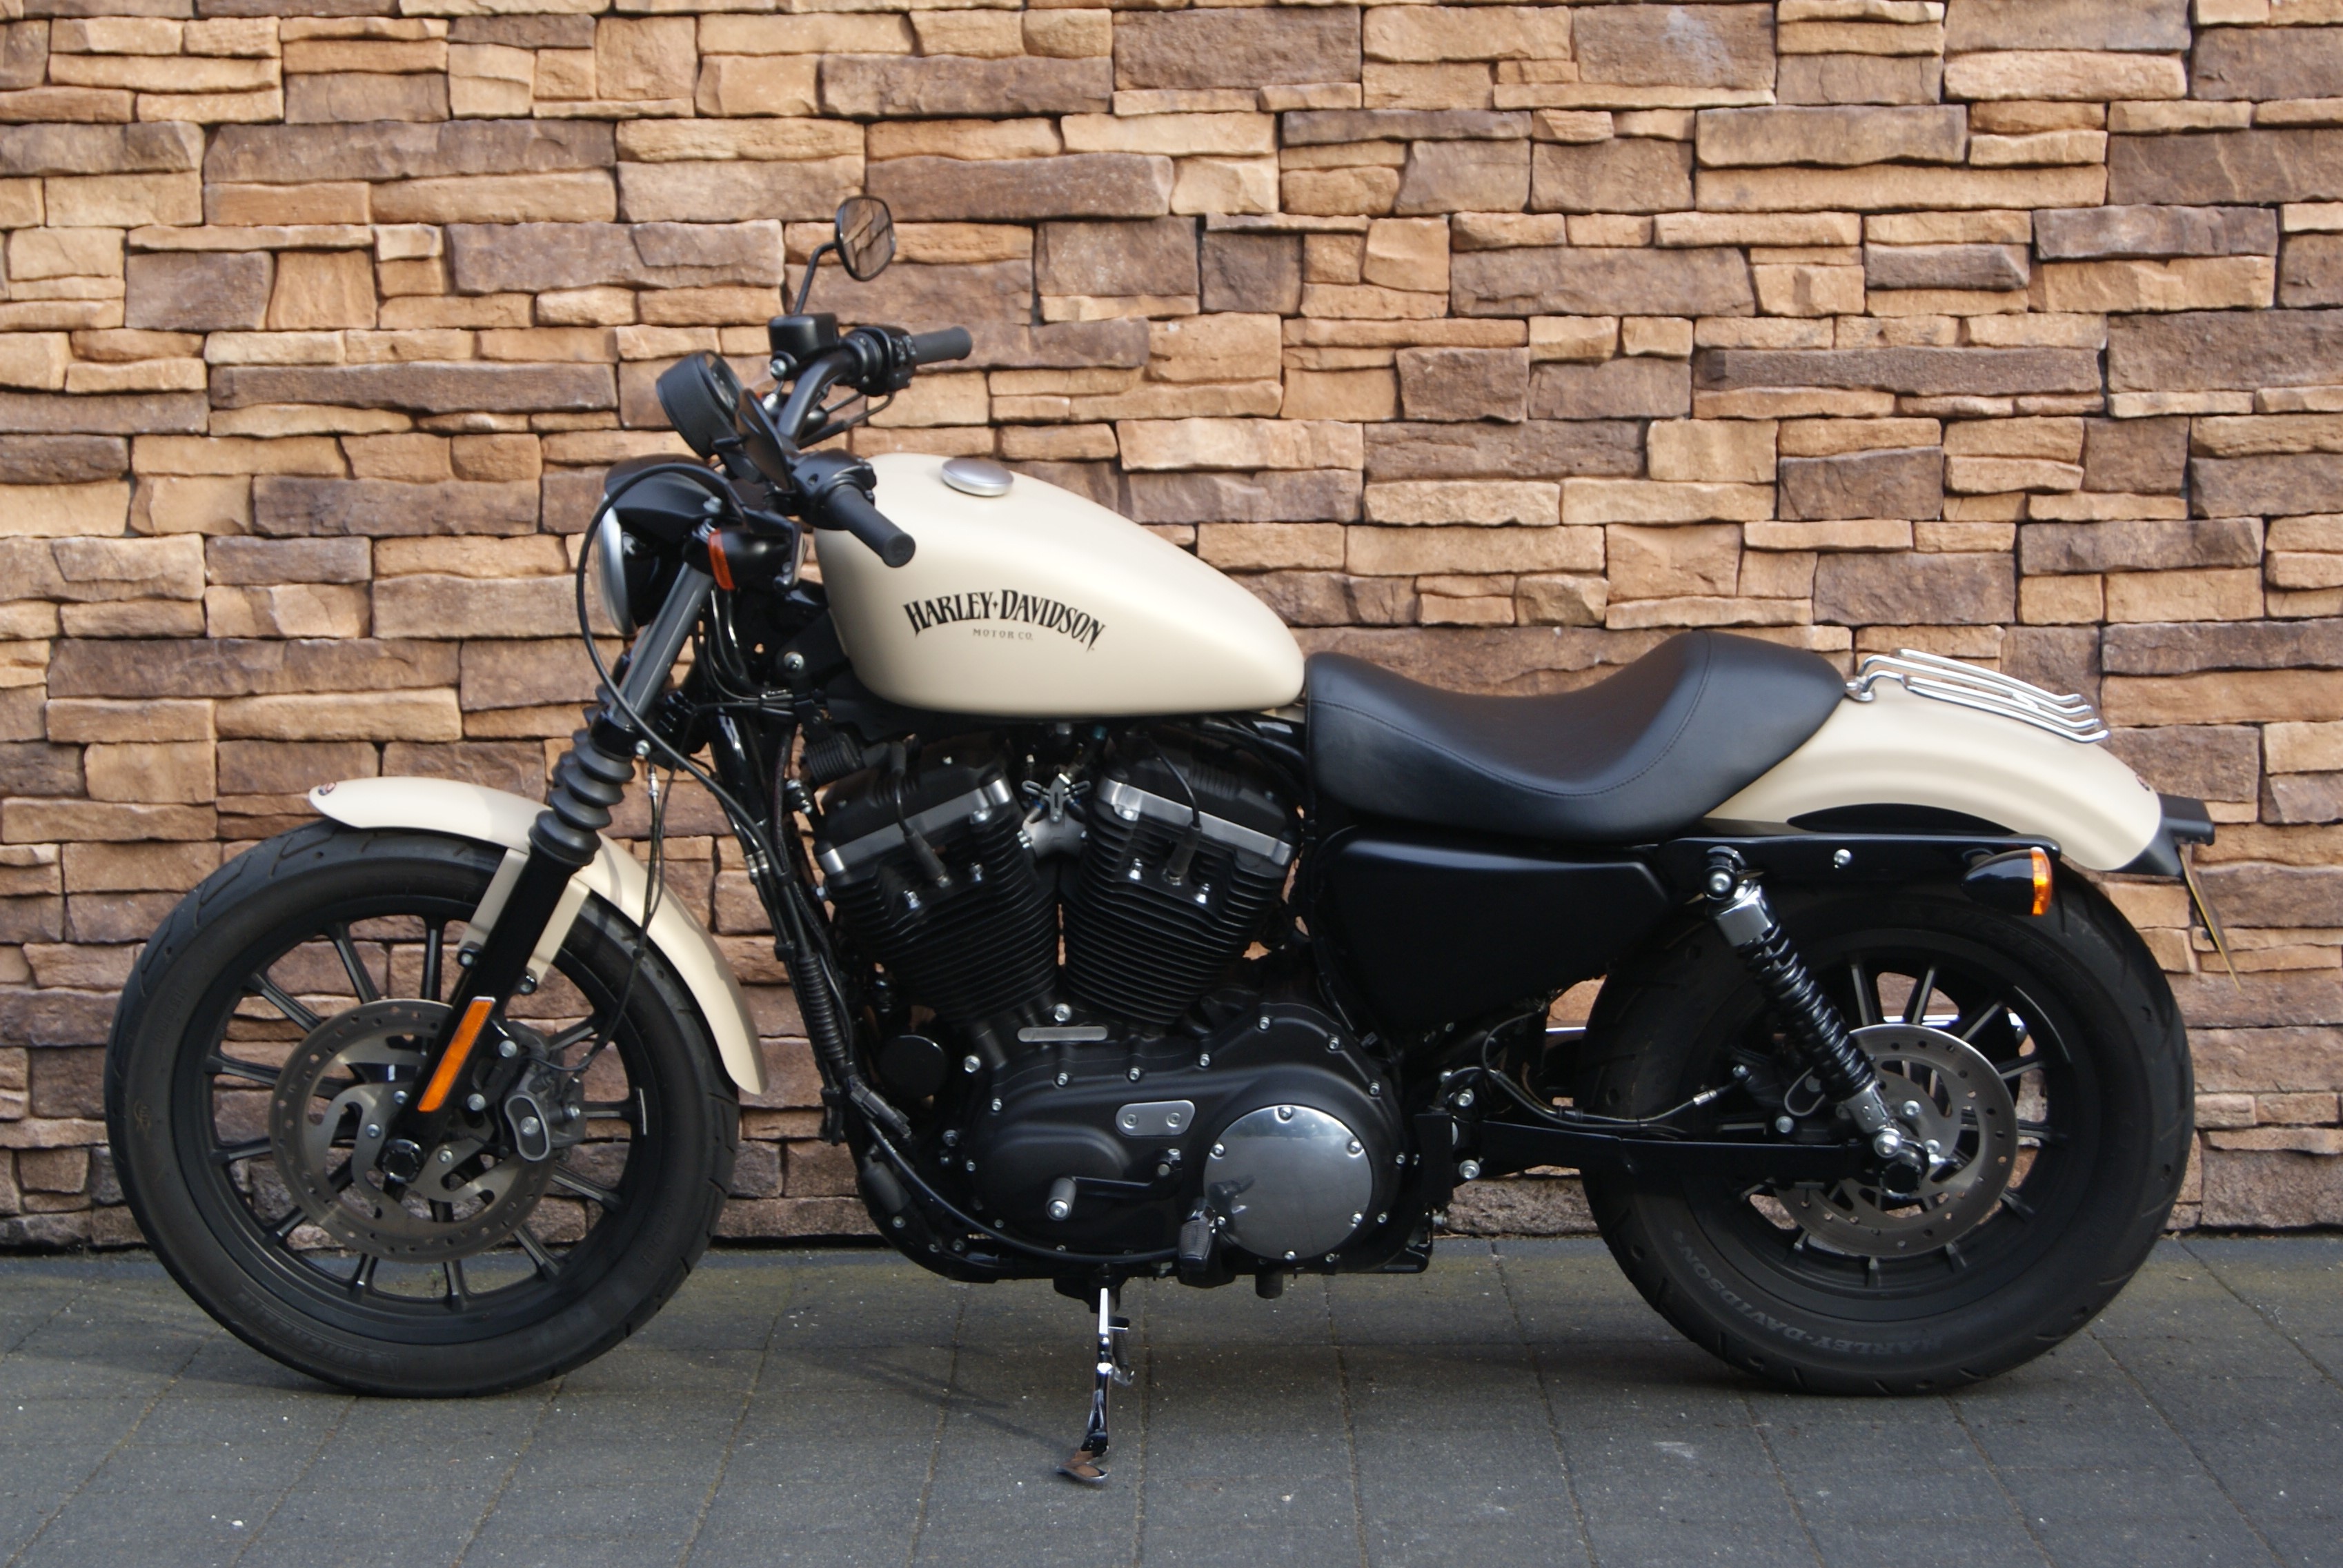 2016 Harley-Davidson XL883 N Sportster Iron ABS Sand Camo Denim